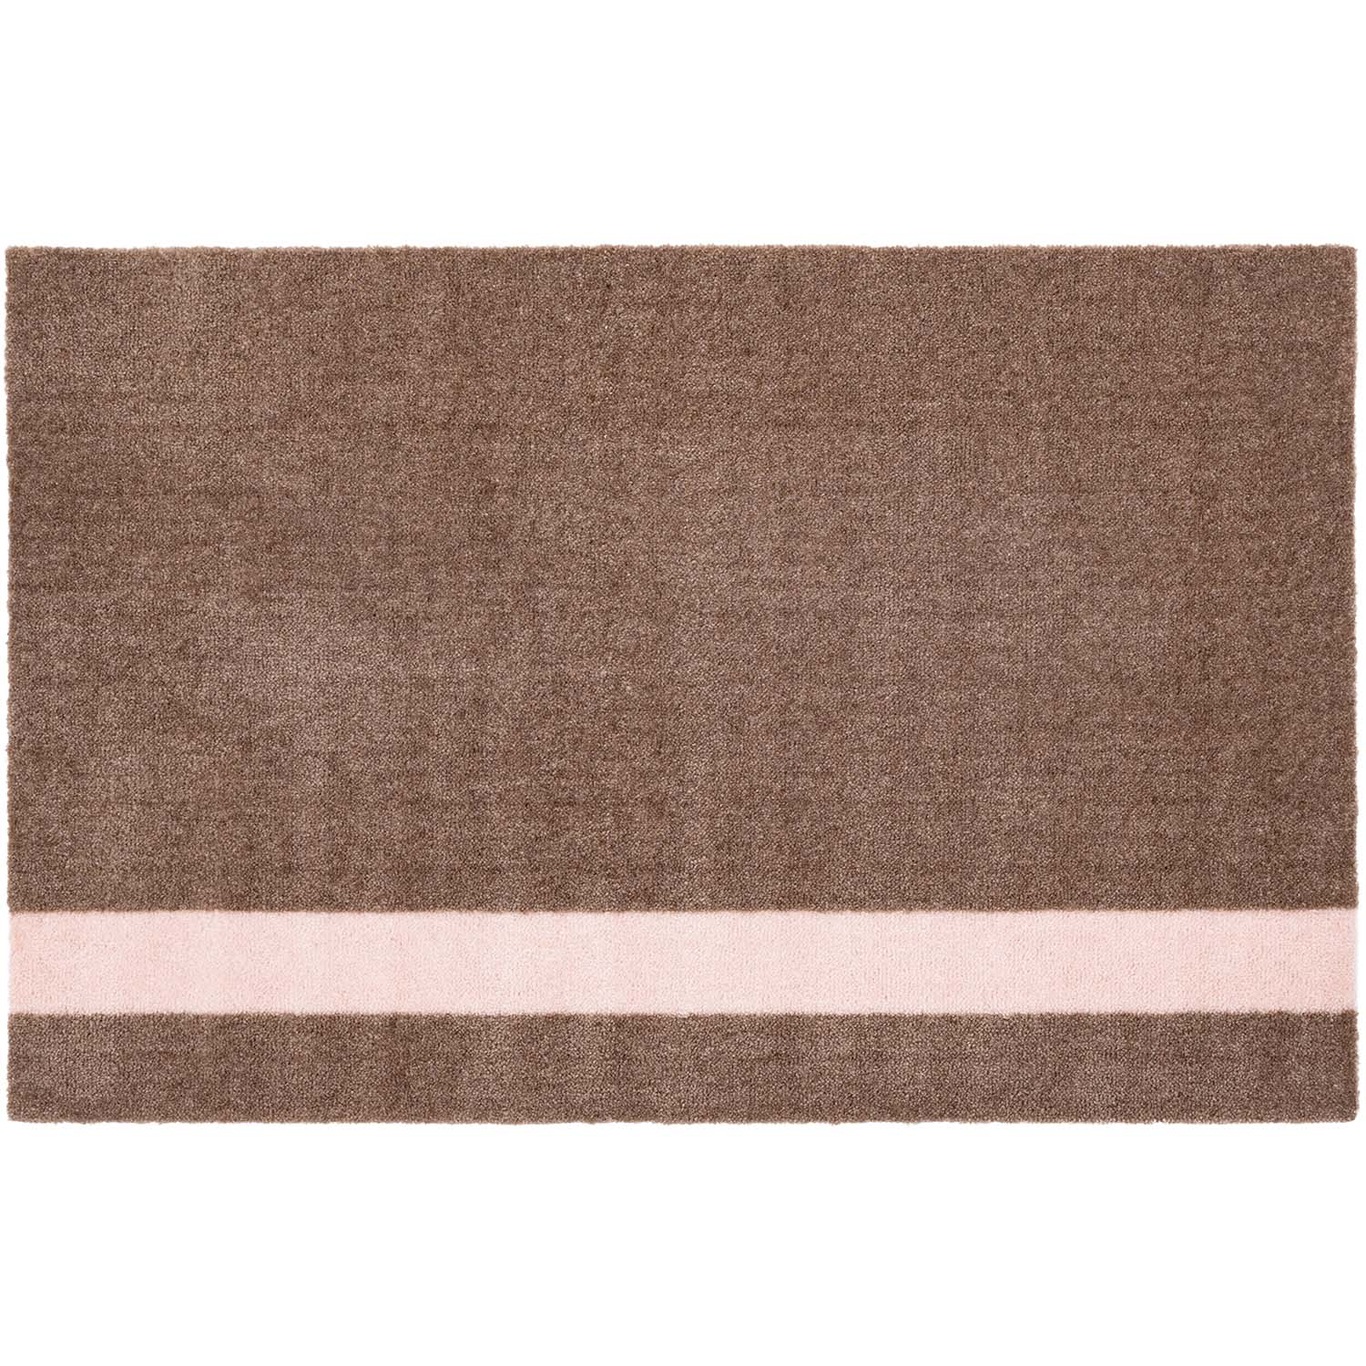 Stripes Teppich Vertikal Sandfarben/Light Rose, 60x90 cm